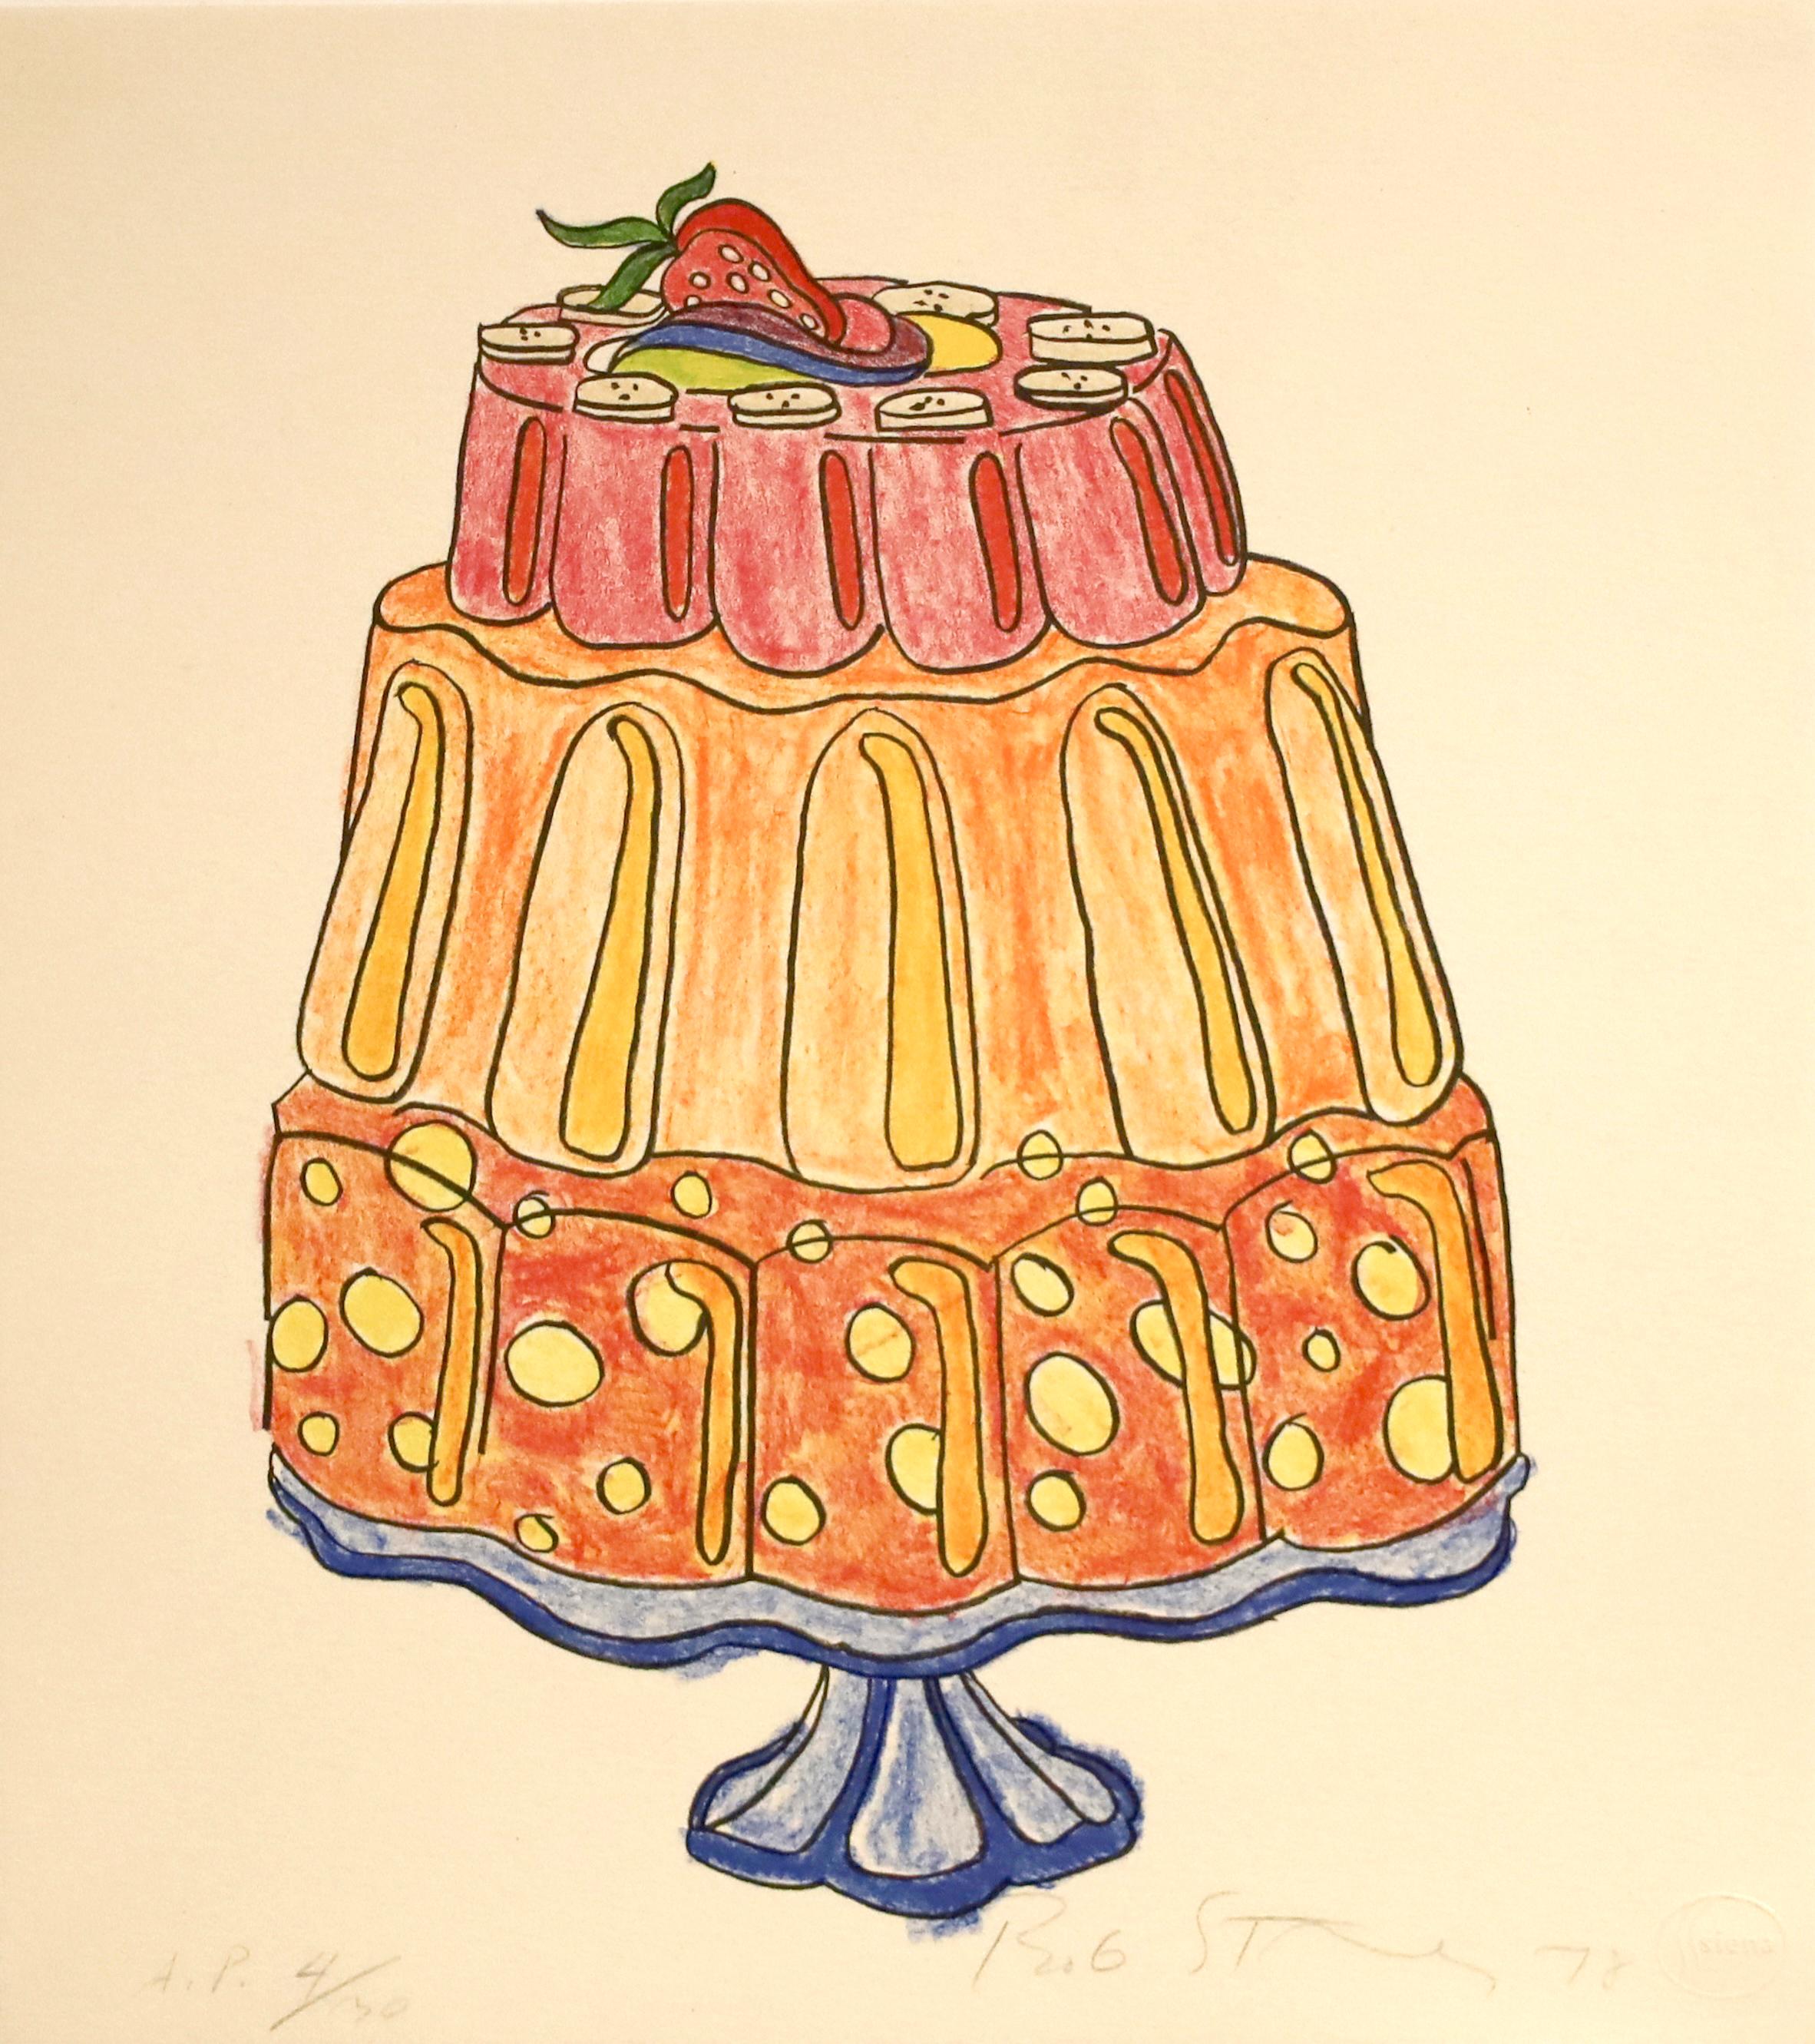 Robert Bob Stanley Print – "Torte"